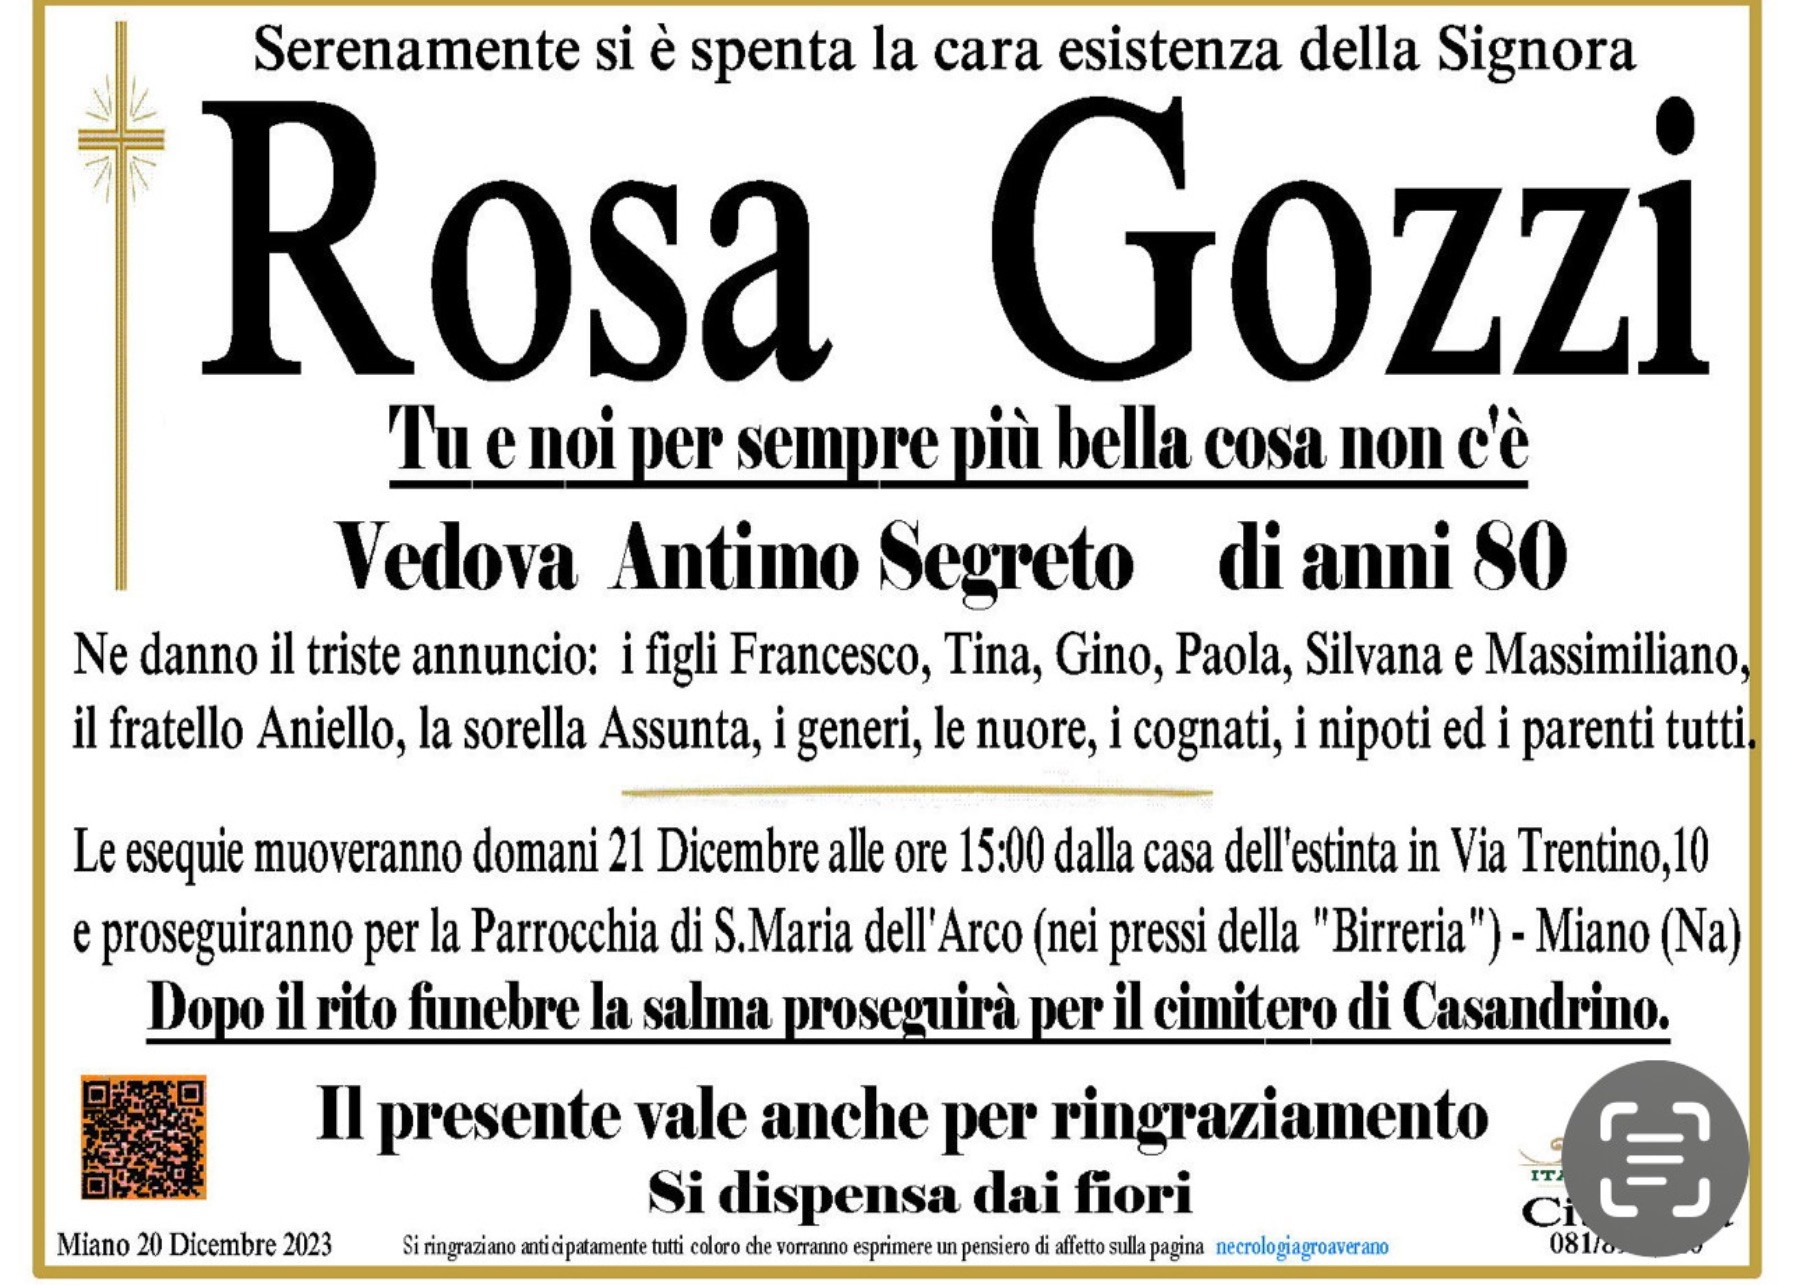 Rosa Gozzi